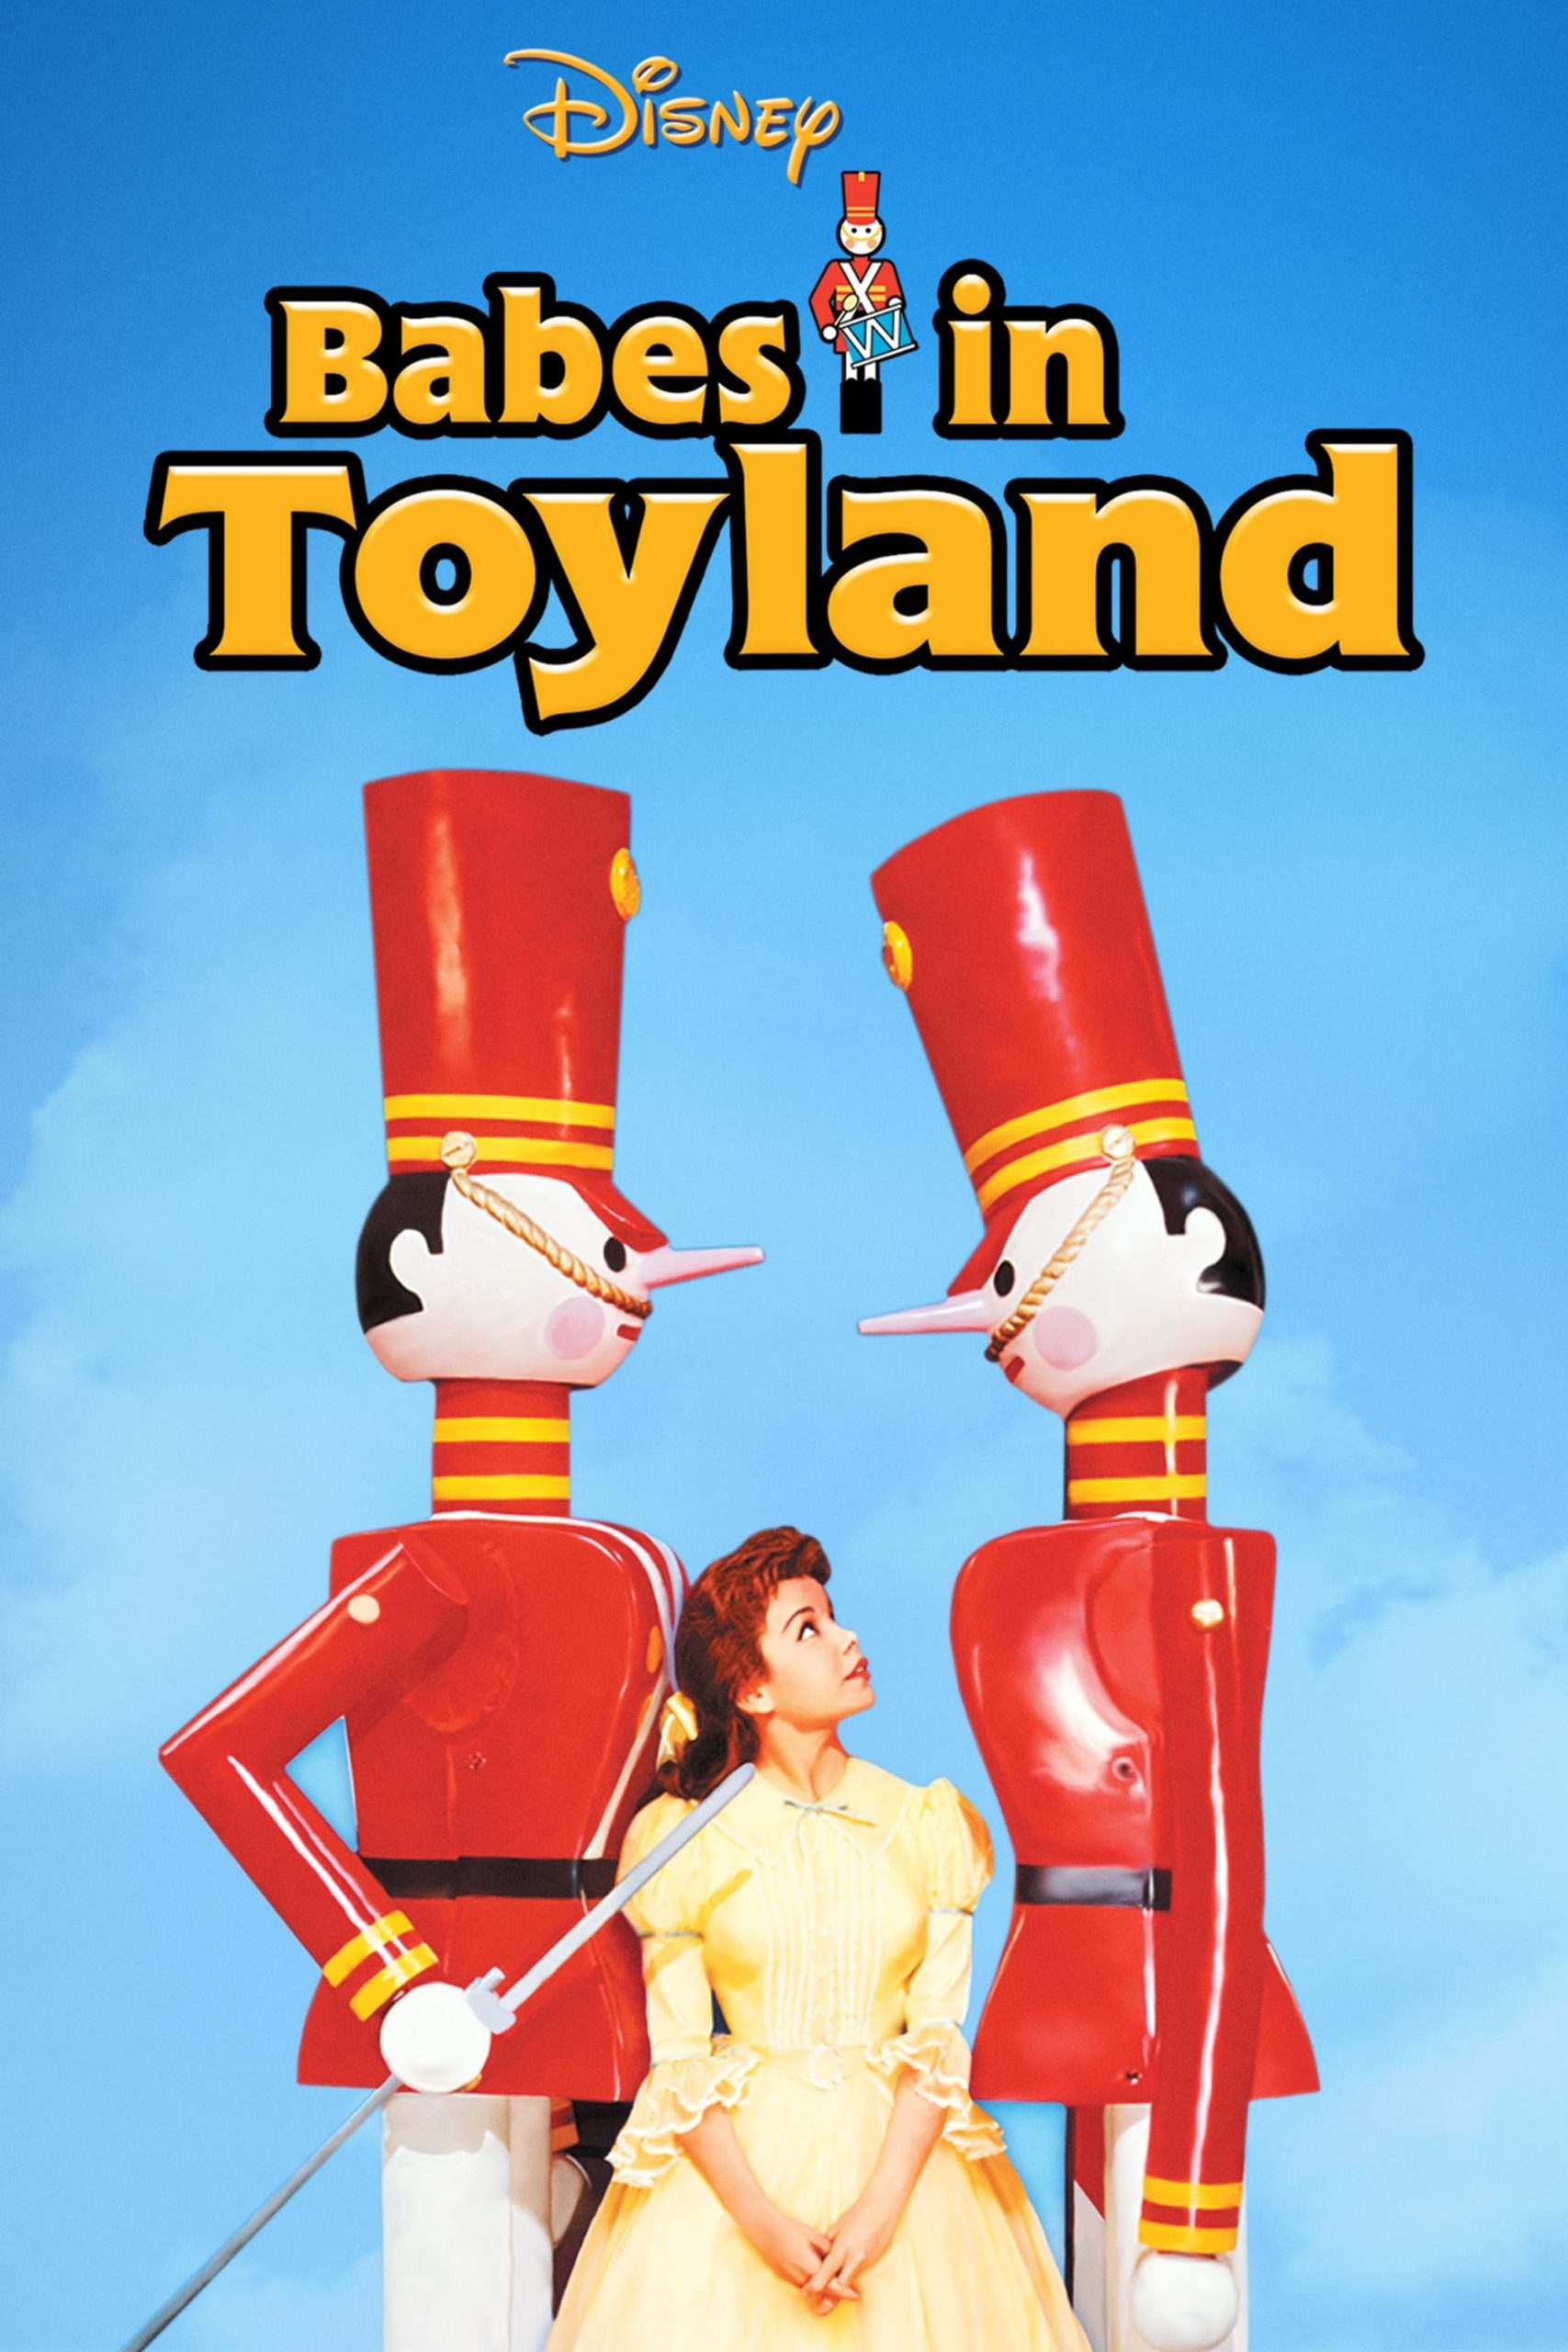 دانلود صوت دوبله فیلم Babes in Toyland 1961